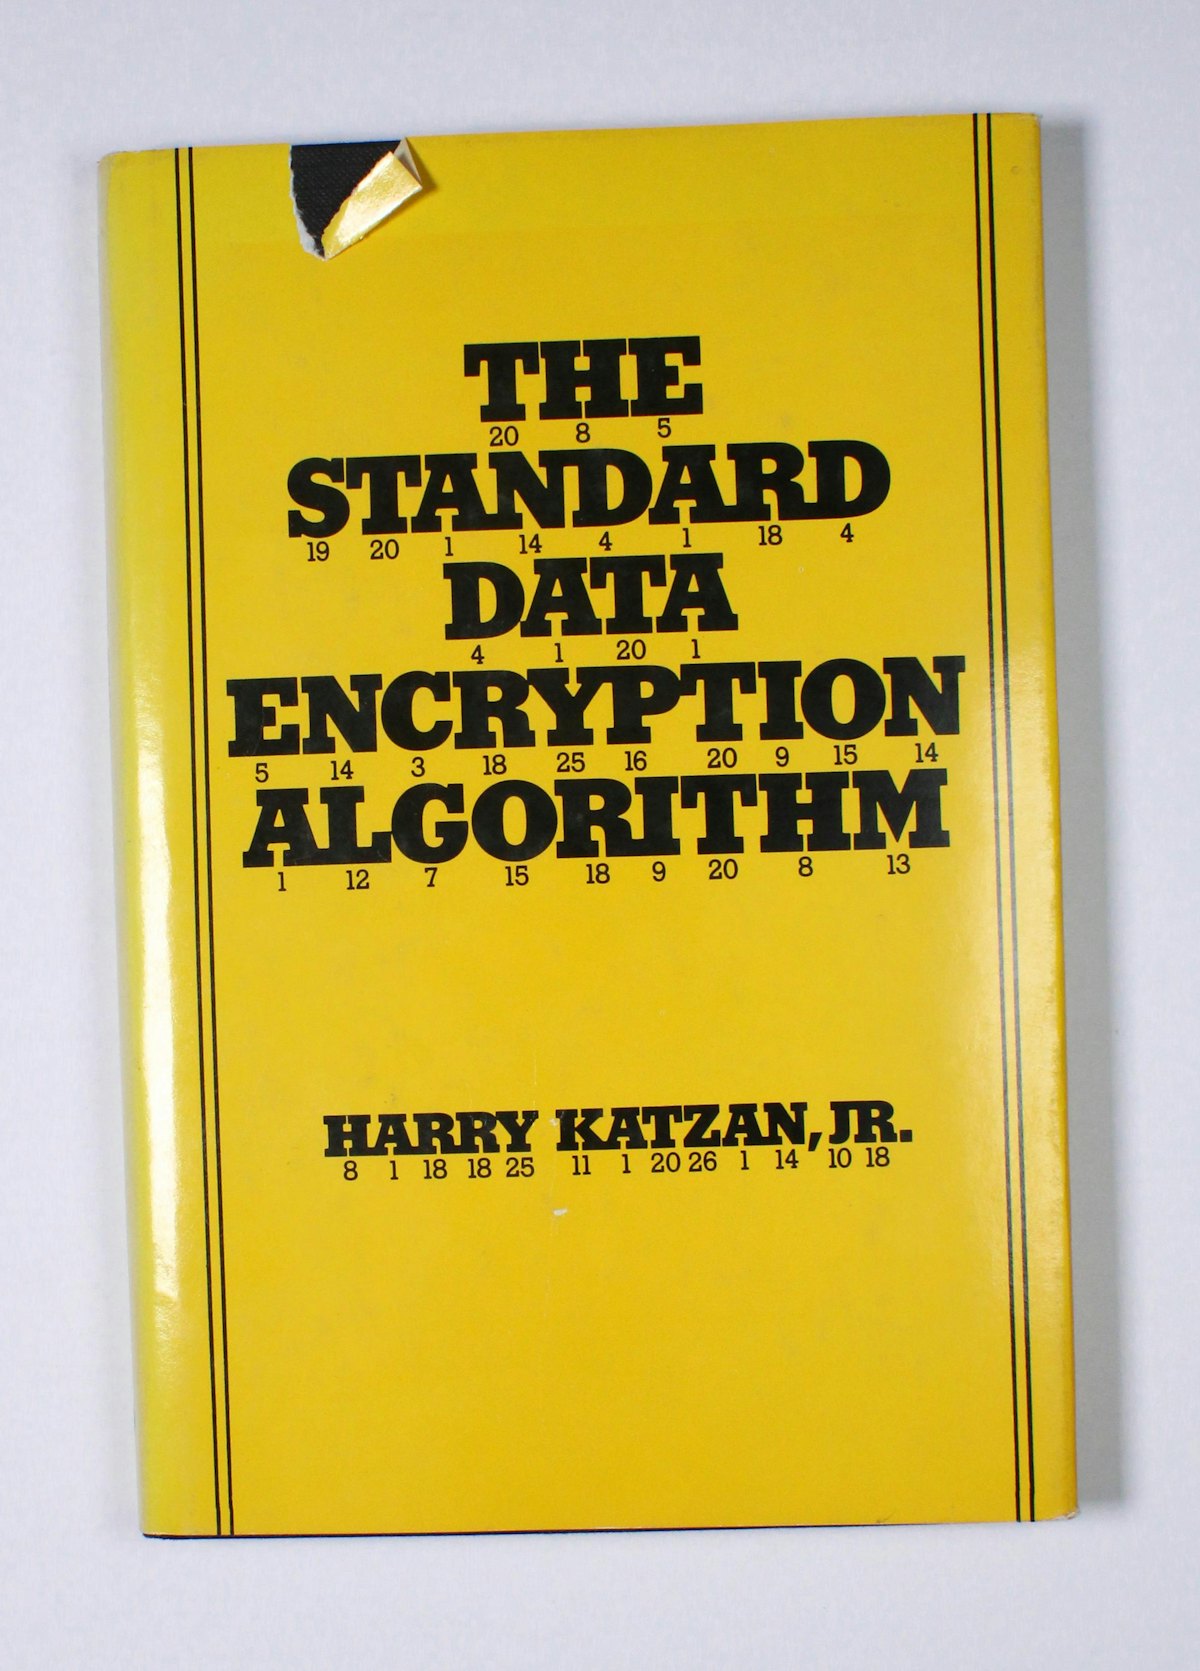 The Standard Data Encryption Algorithm